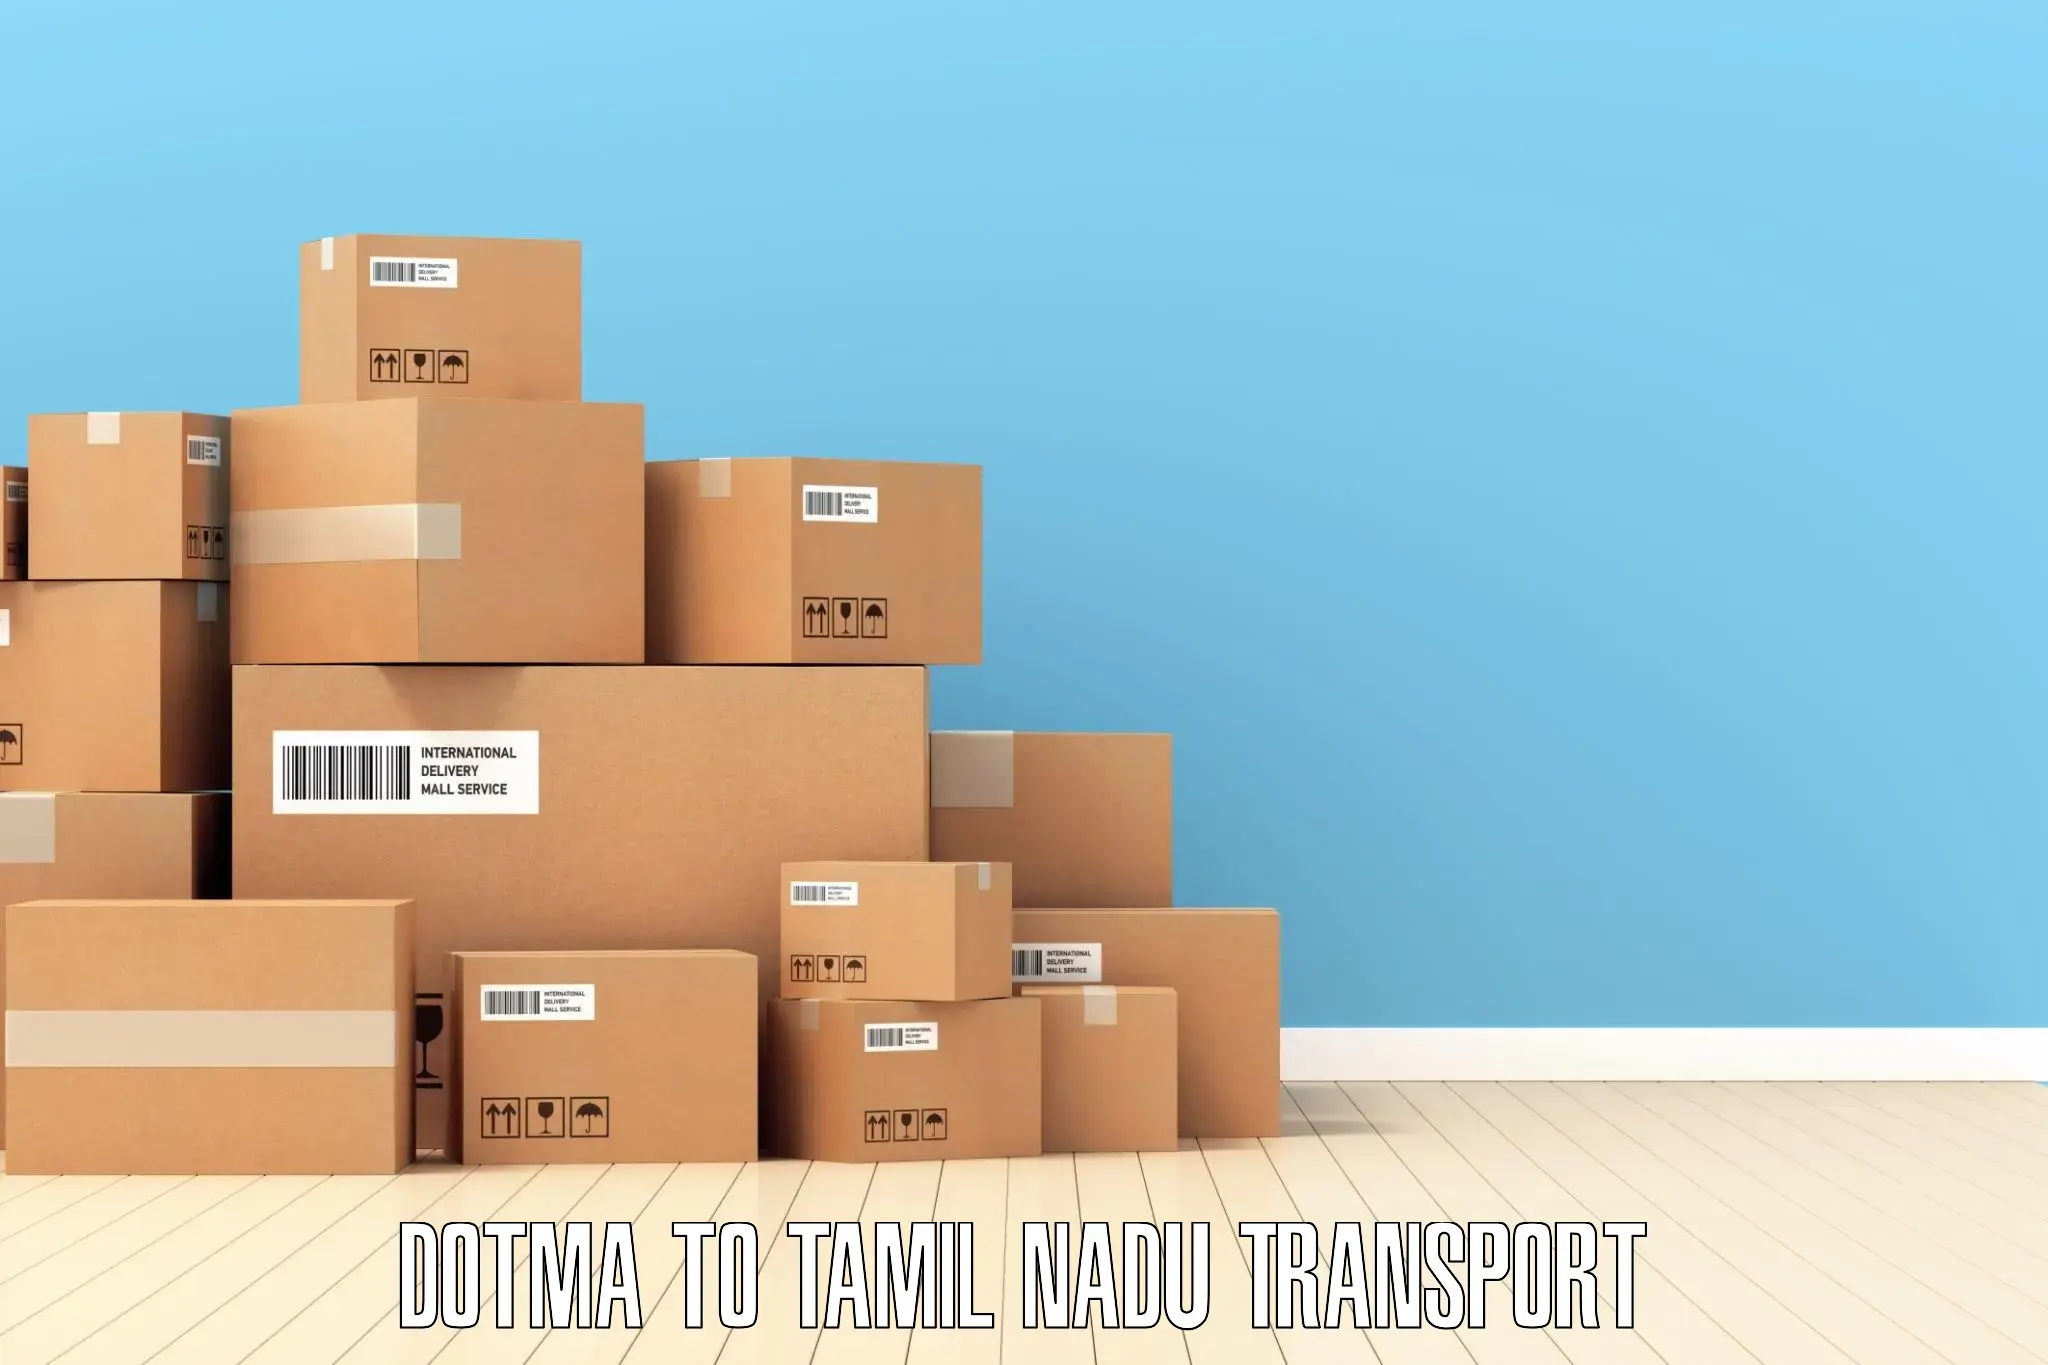 Furniture transport service Dotma to Gudiyattam